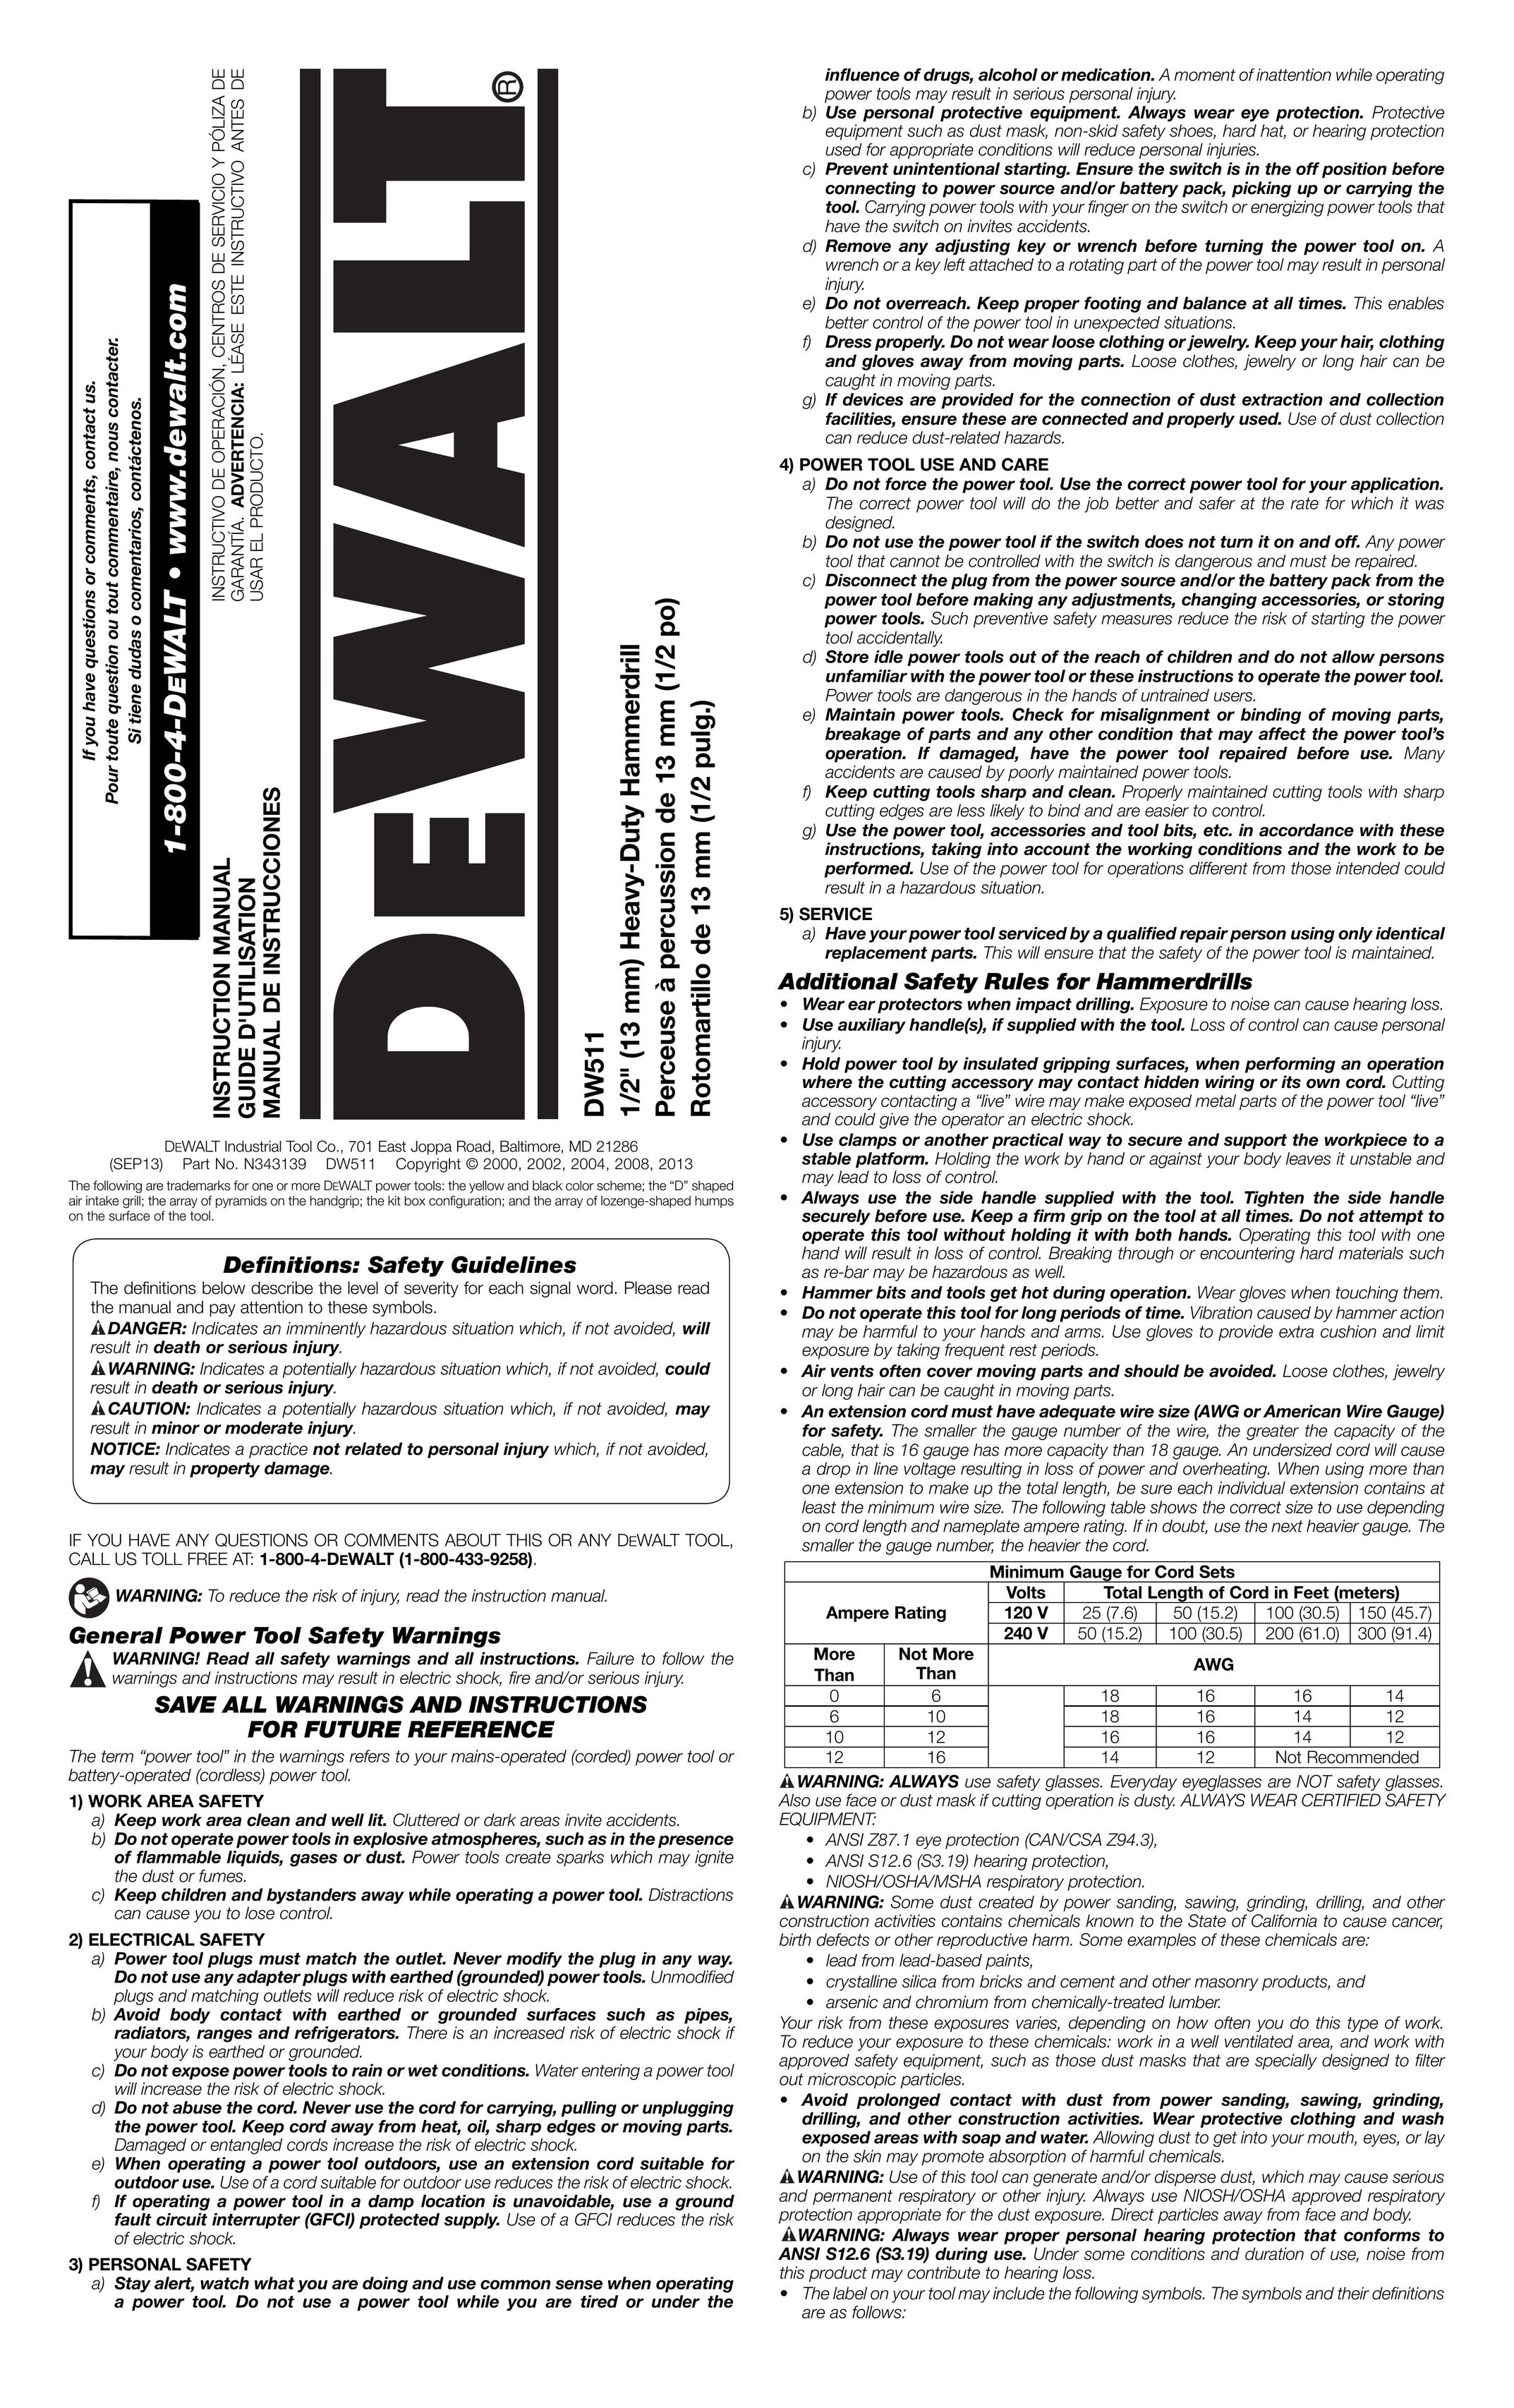 DeWalt DW511 Drill User Manual